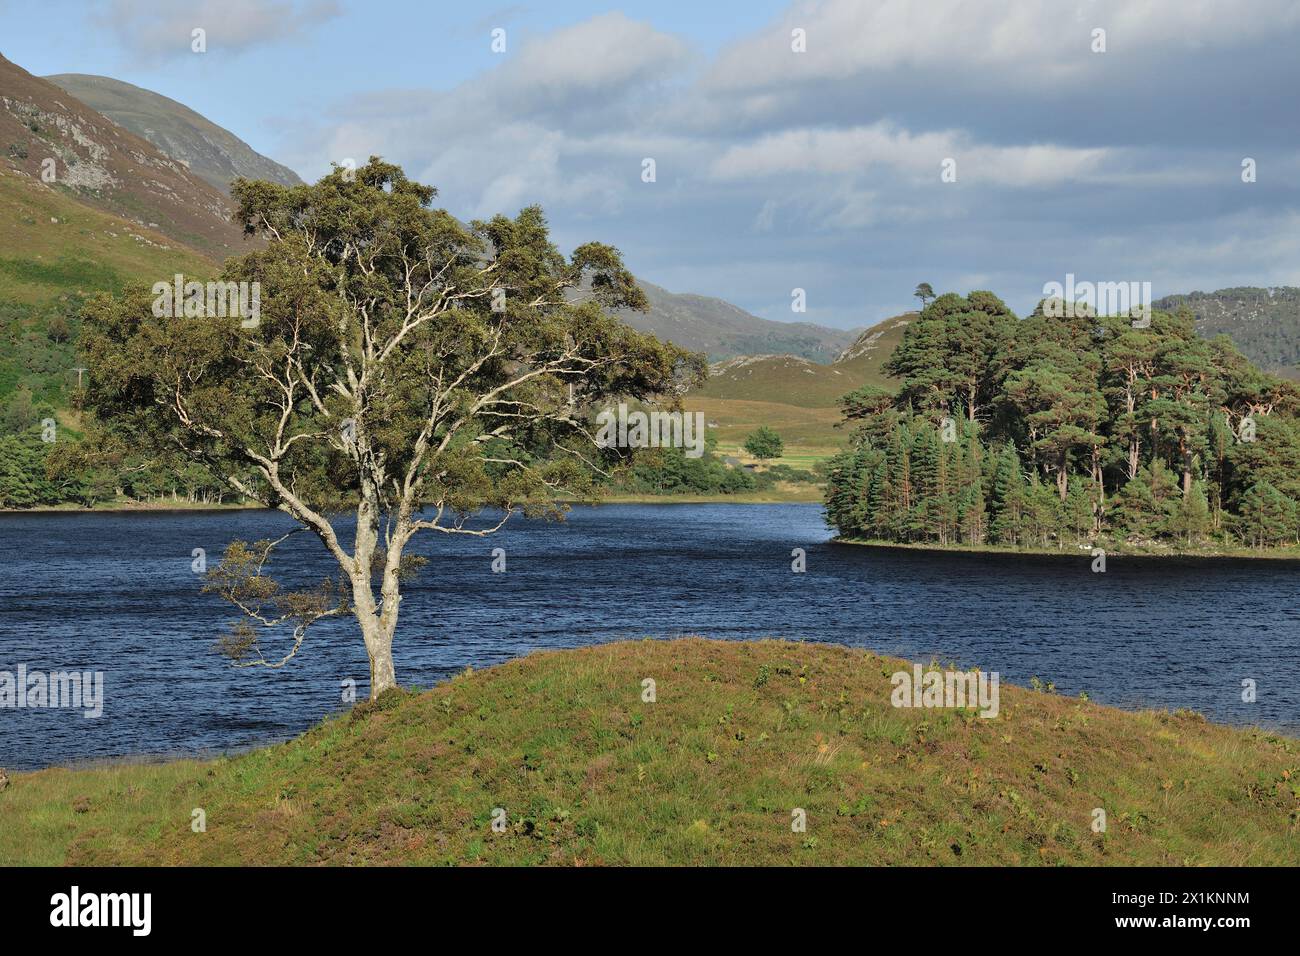 Glen Strathfarrar, Loch a Mhuillidh, with wooded island and alder tree (Alnus glutinosa) in foreground, Glen Strathfarrar, Inverness-shire, Scotland, Stock Photo